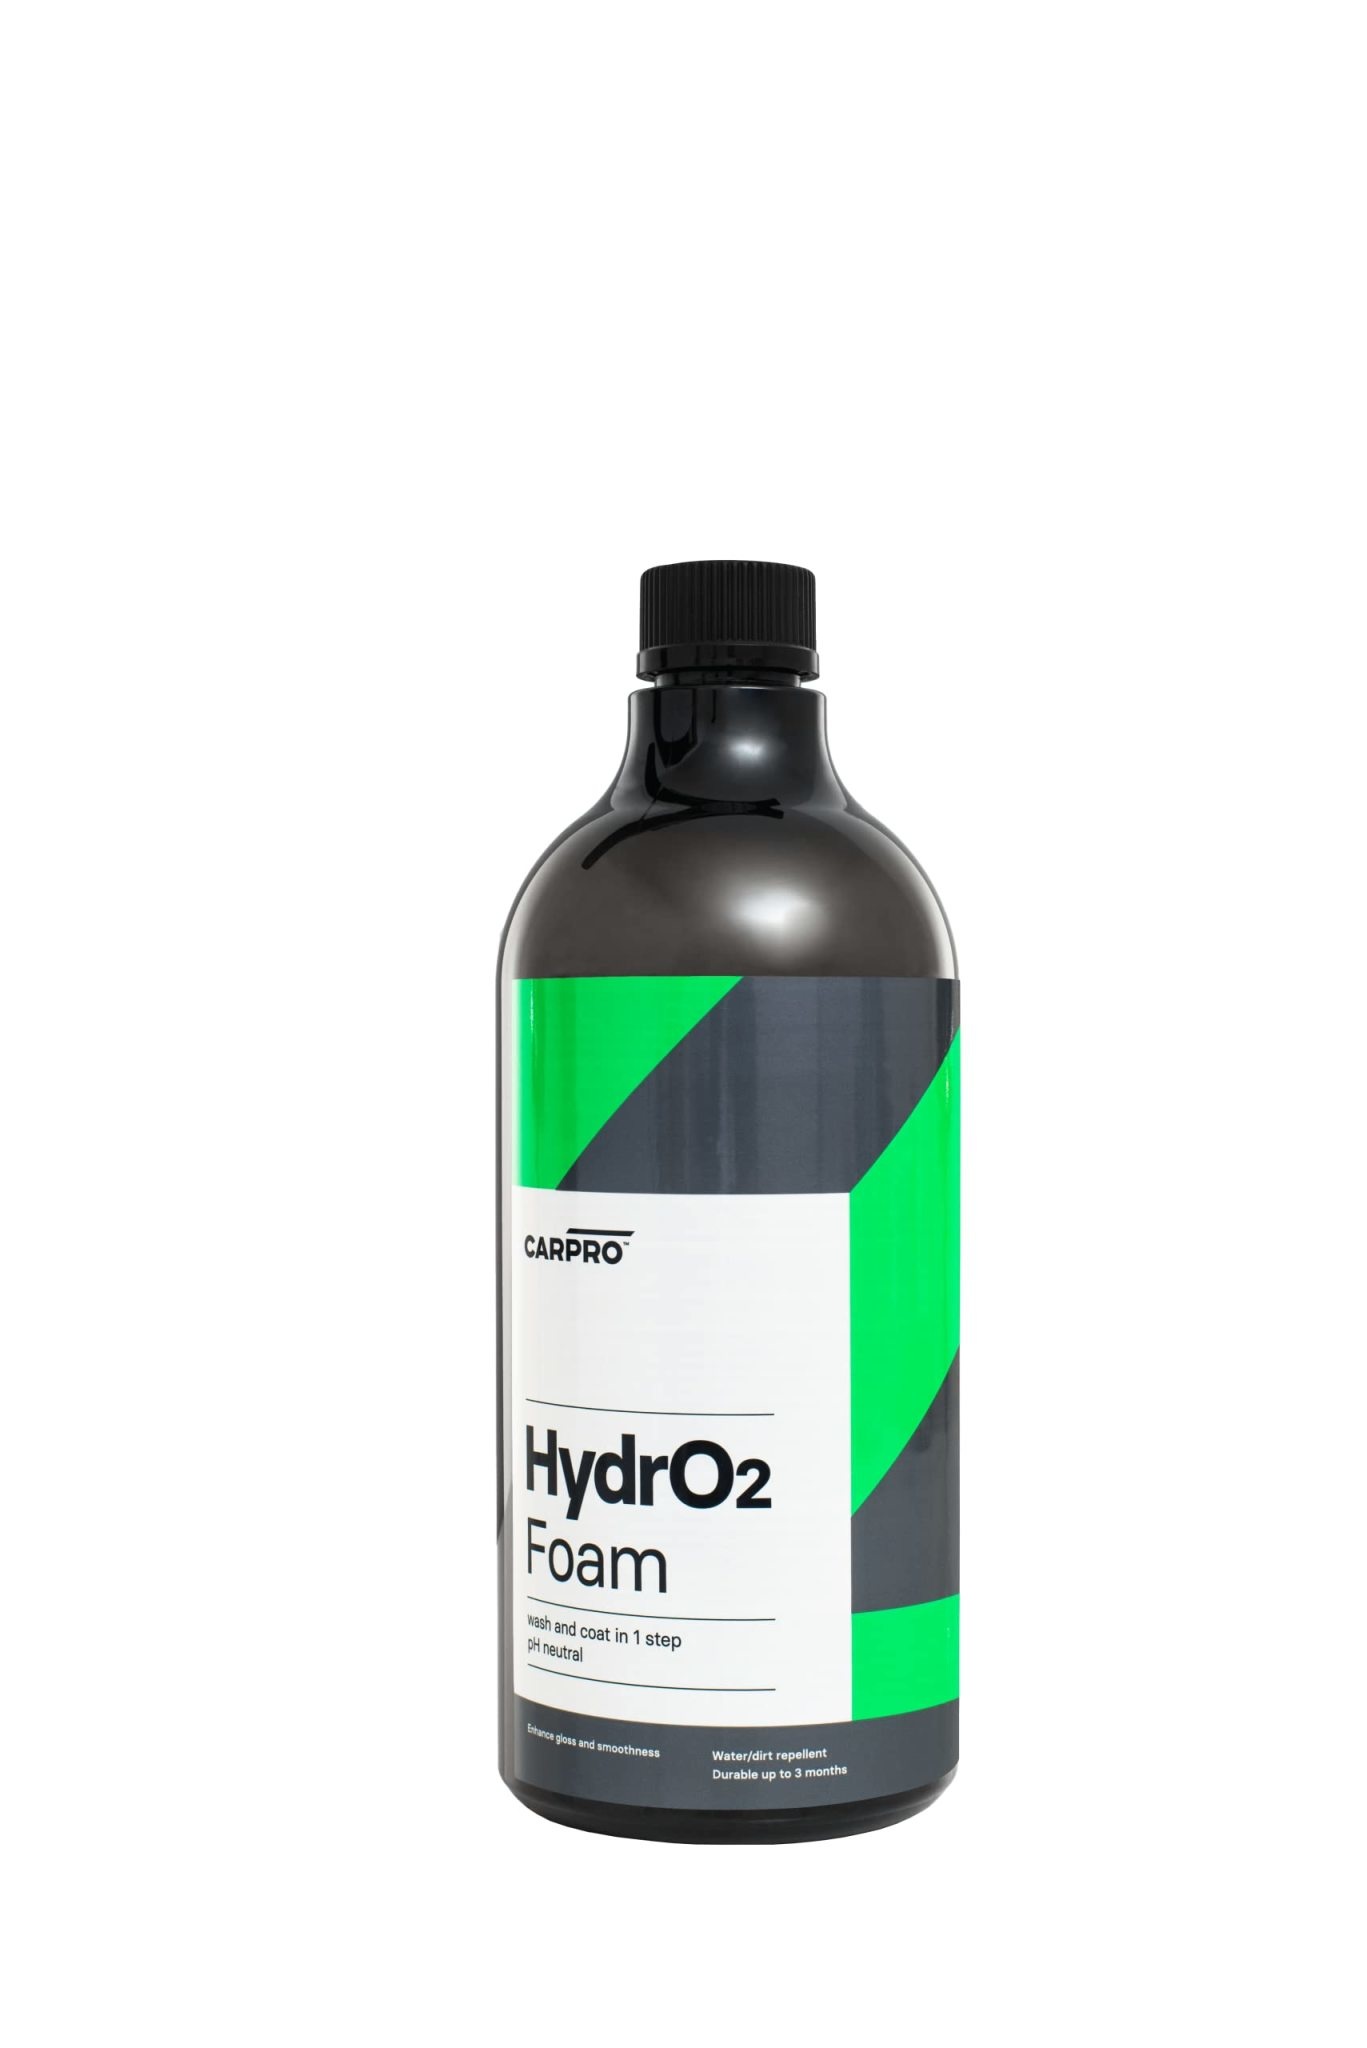 CarPro HydrO2 Foam 1L - Stateside Equipment Sales